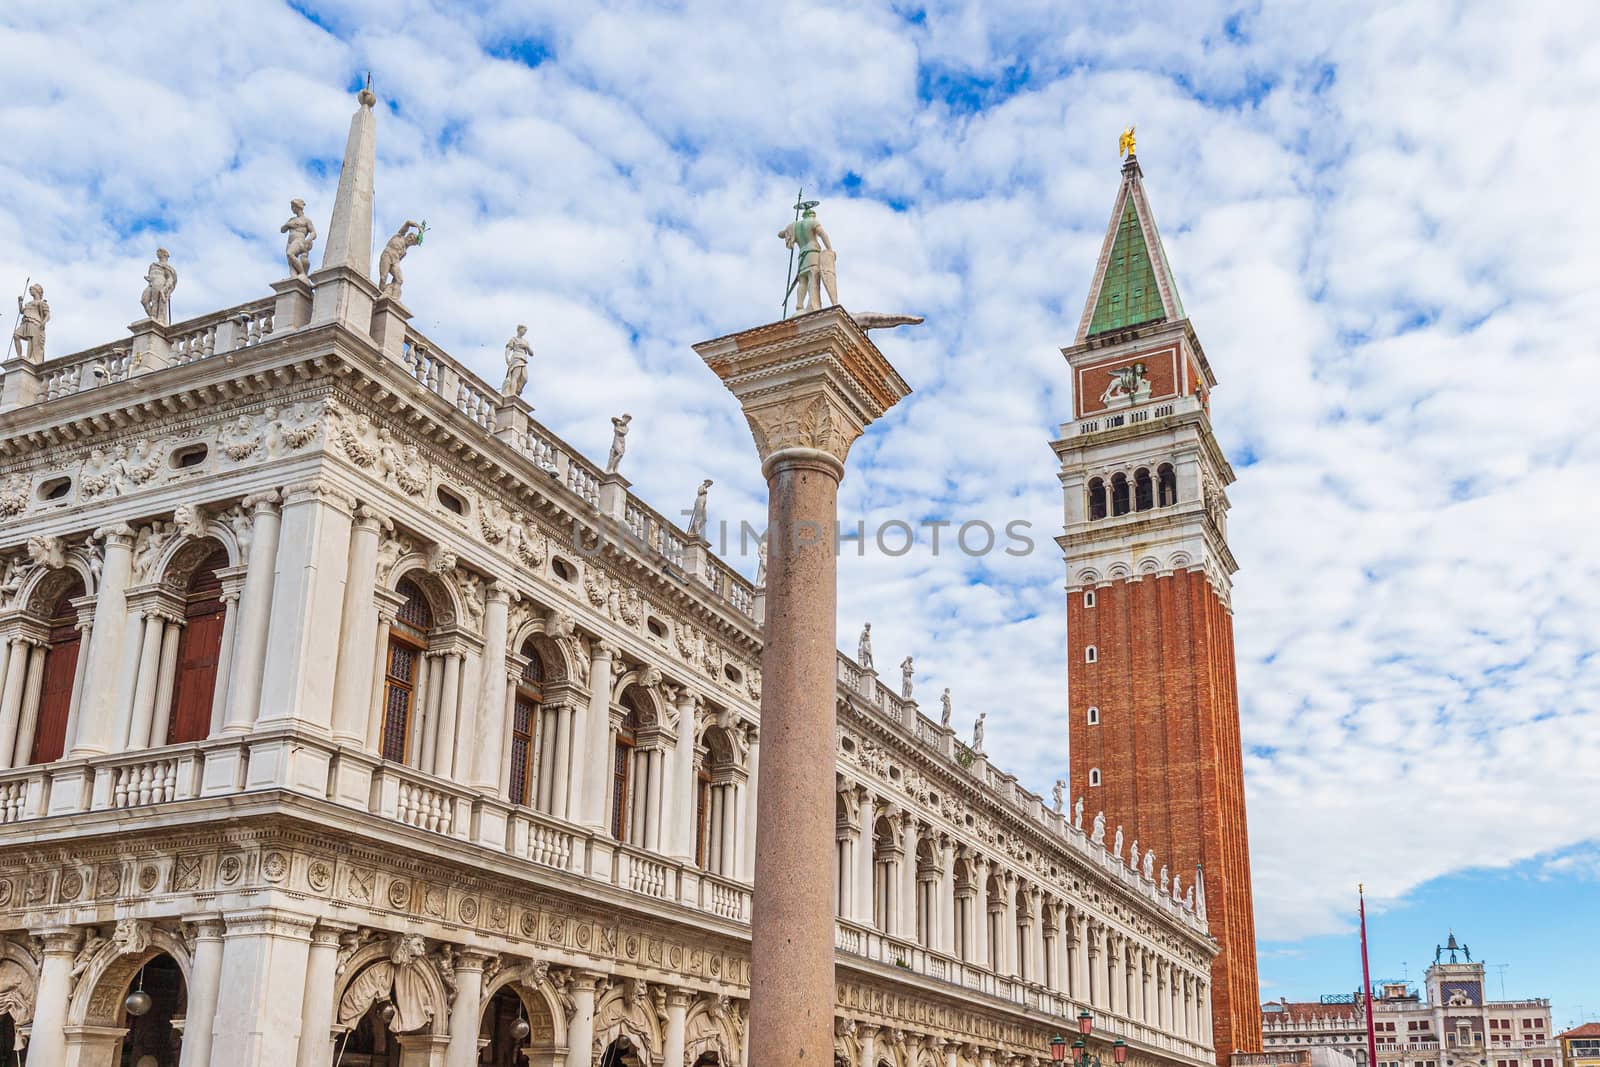 Campanile at Piazza San Marco in Venice